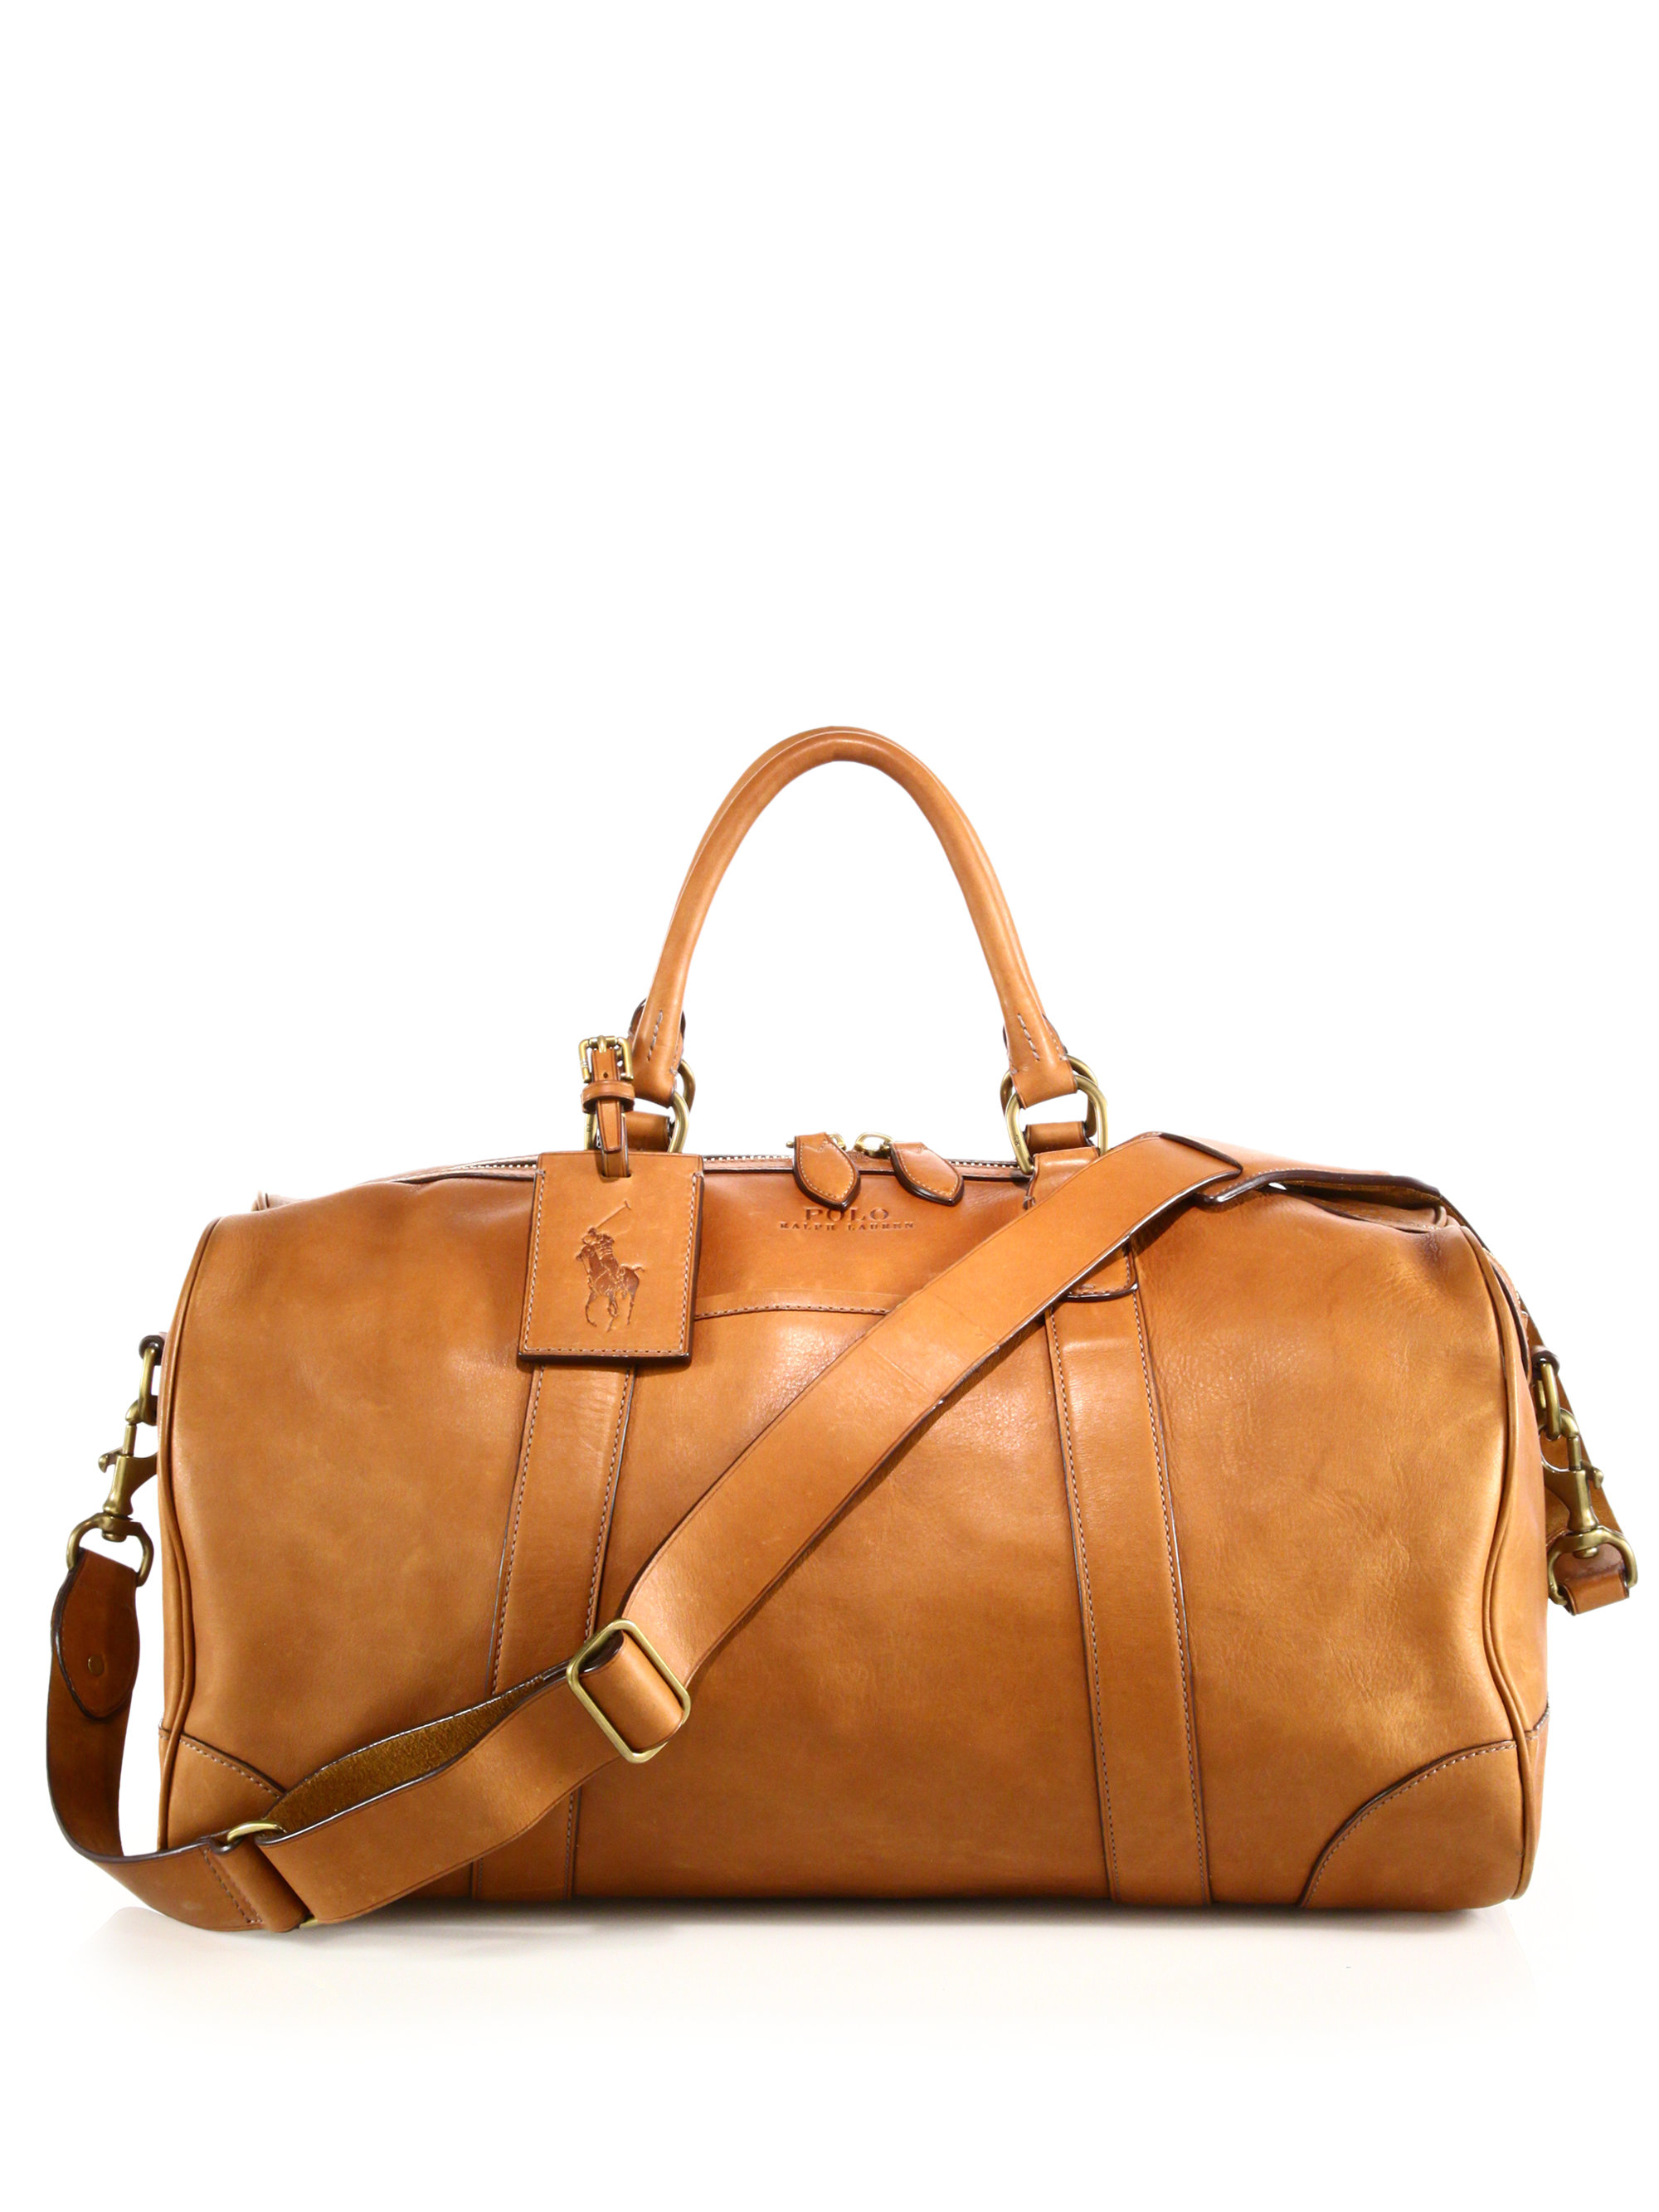 Polo Ralph Lauren Leather Duffel Bag in 